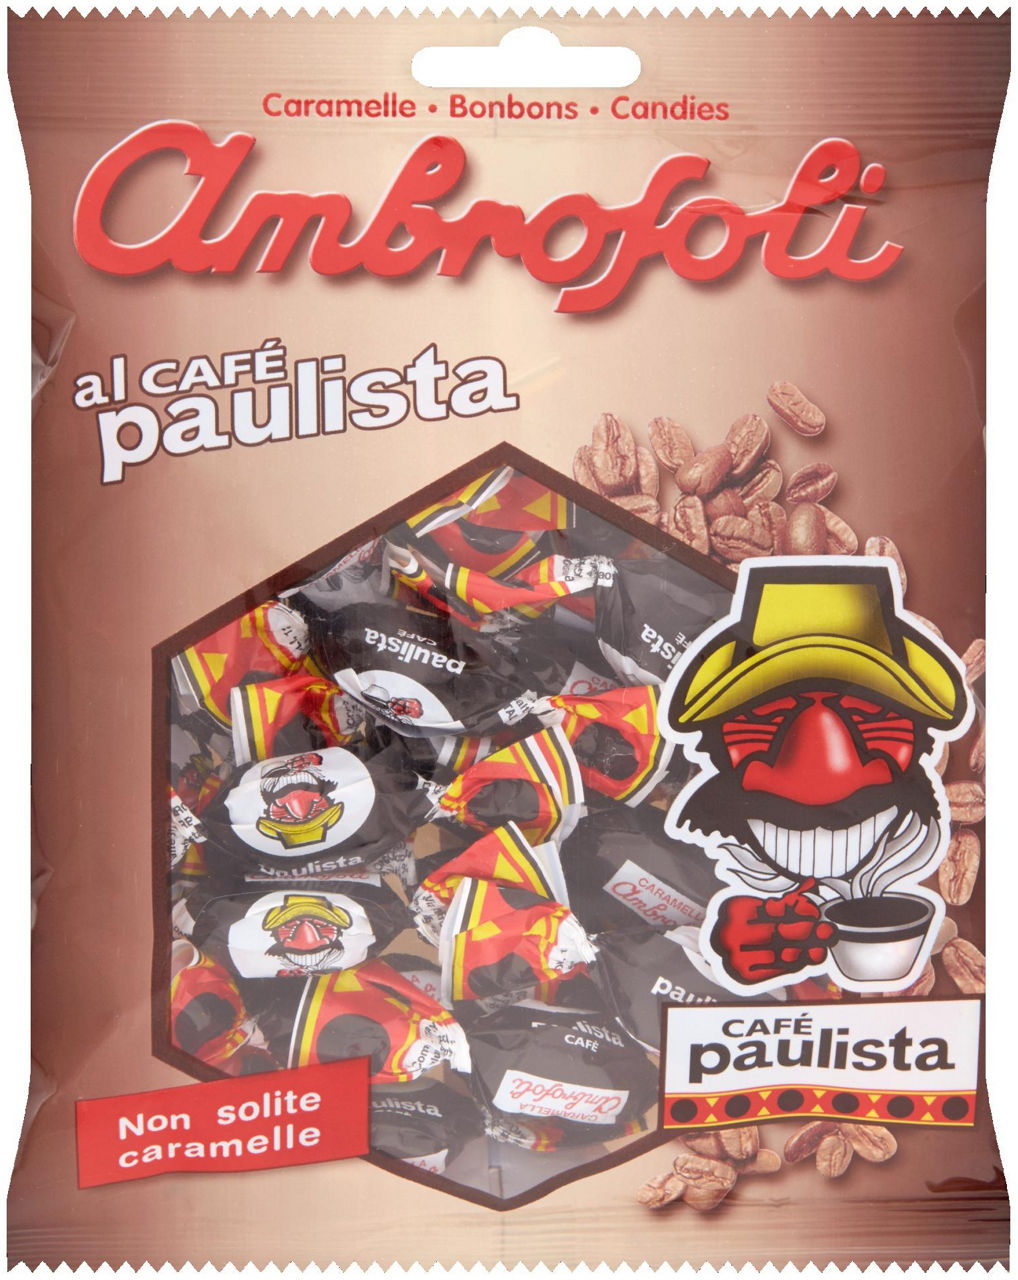 Caramelle ambrosoli caffe' paulista sacc. gr.150